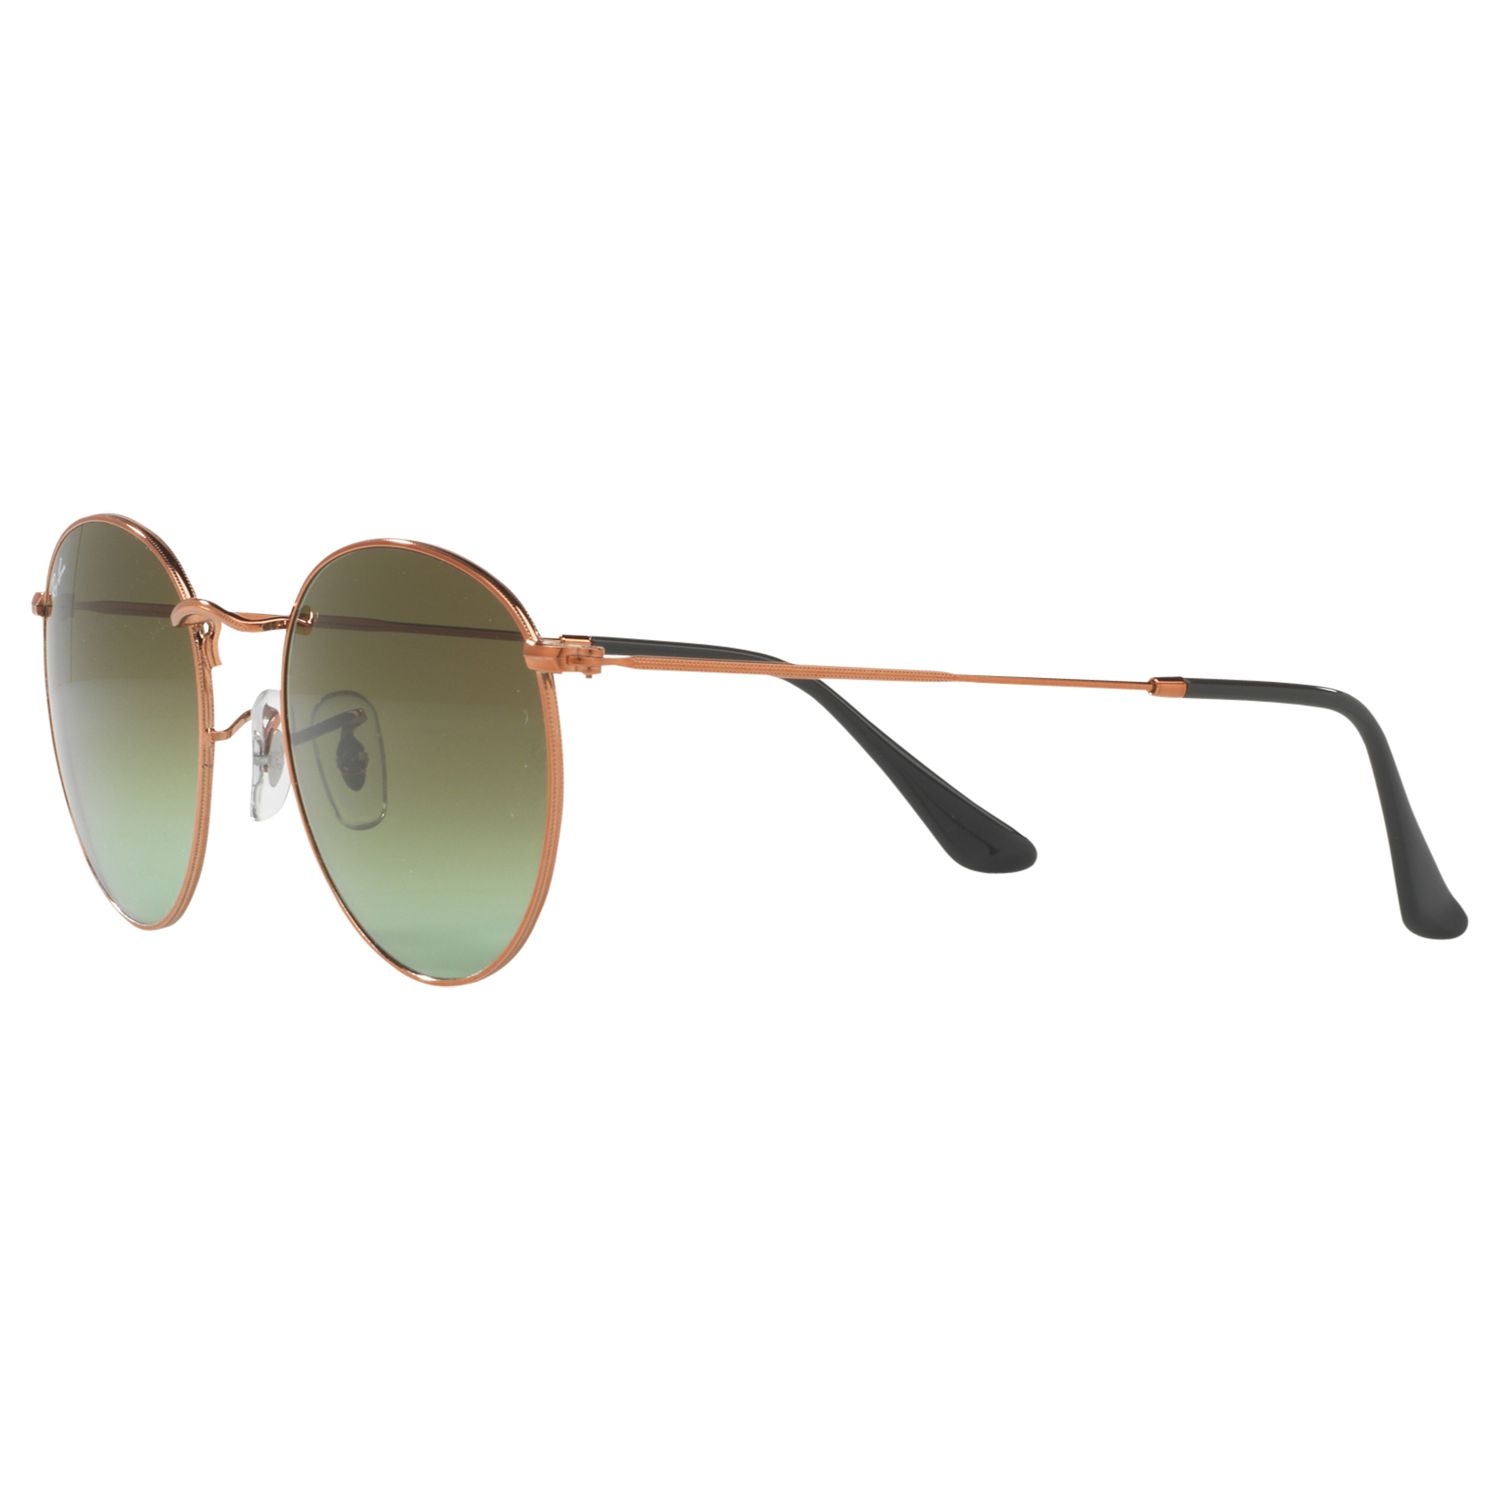 Ray-Ban RB3447 Round Sunglasses, Bronze/Green Gradient